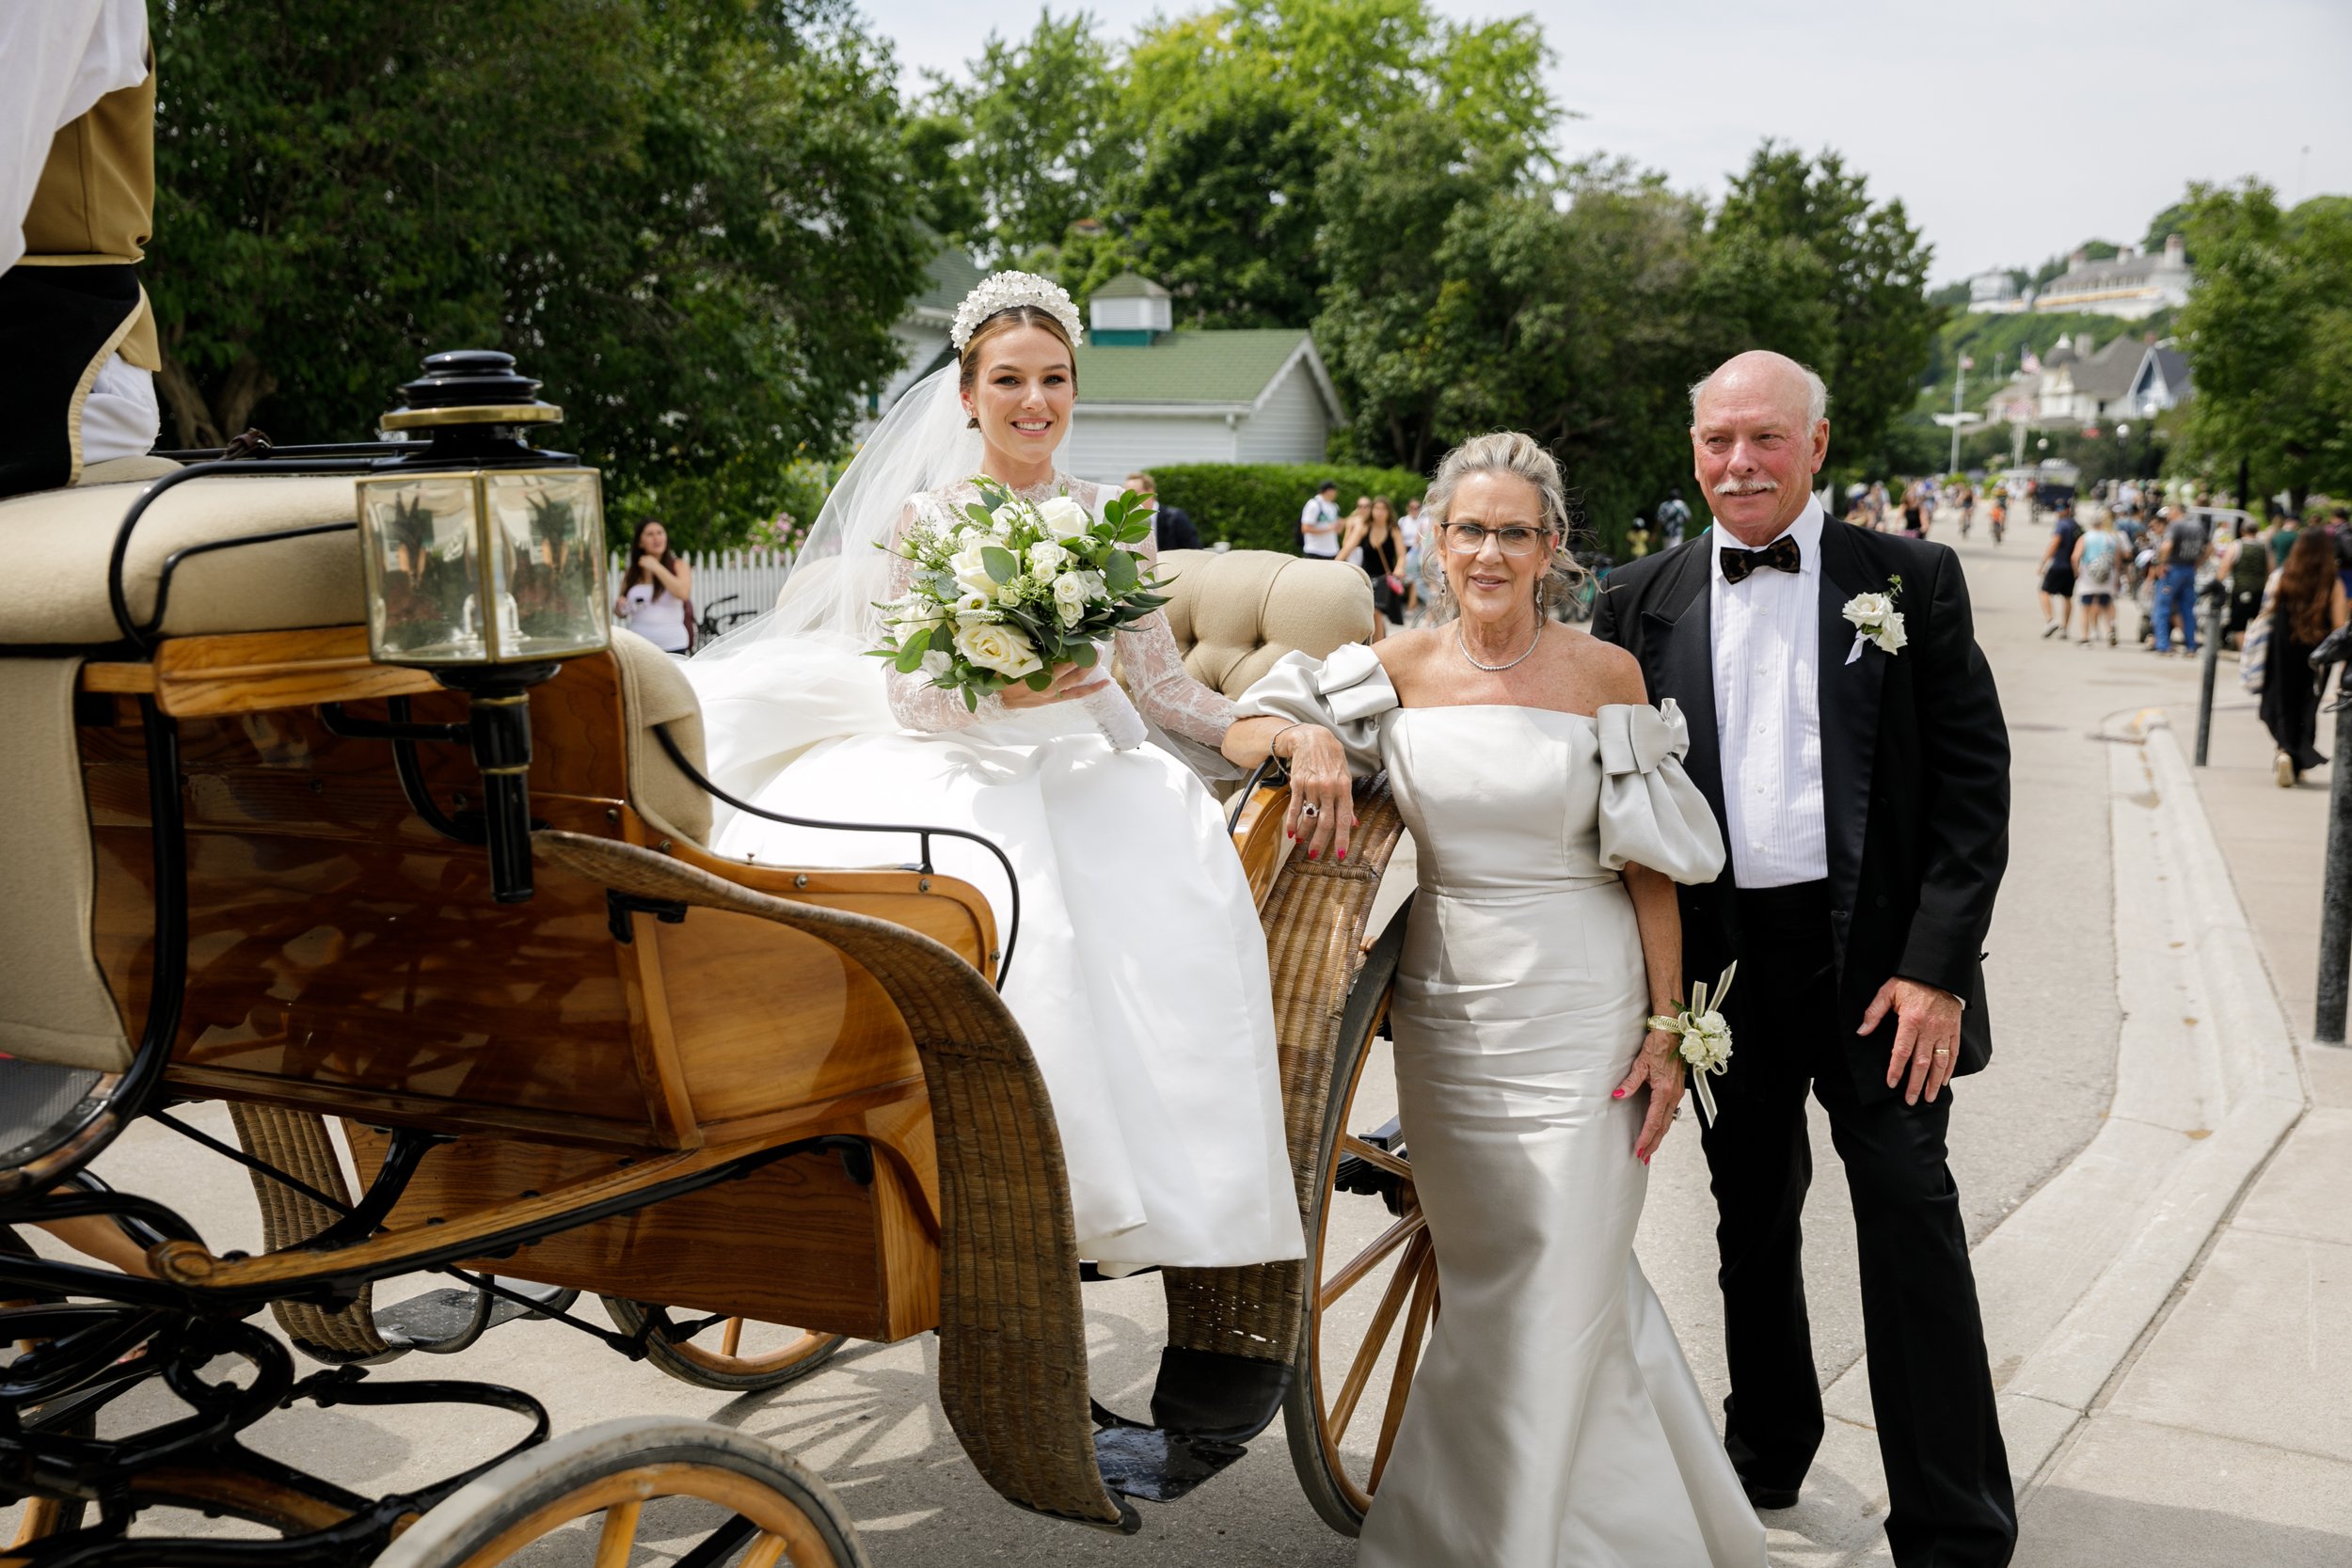 16aNorthern-Michigan-Mackinac-Island-Wedding-Andrejka-Photography-AN-365.jpg